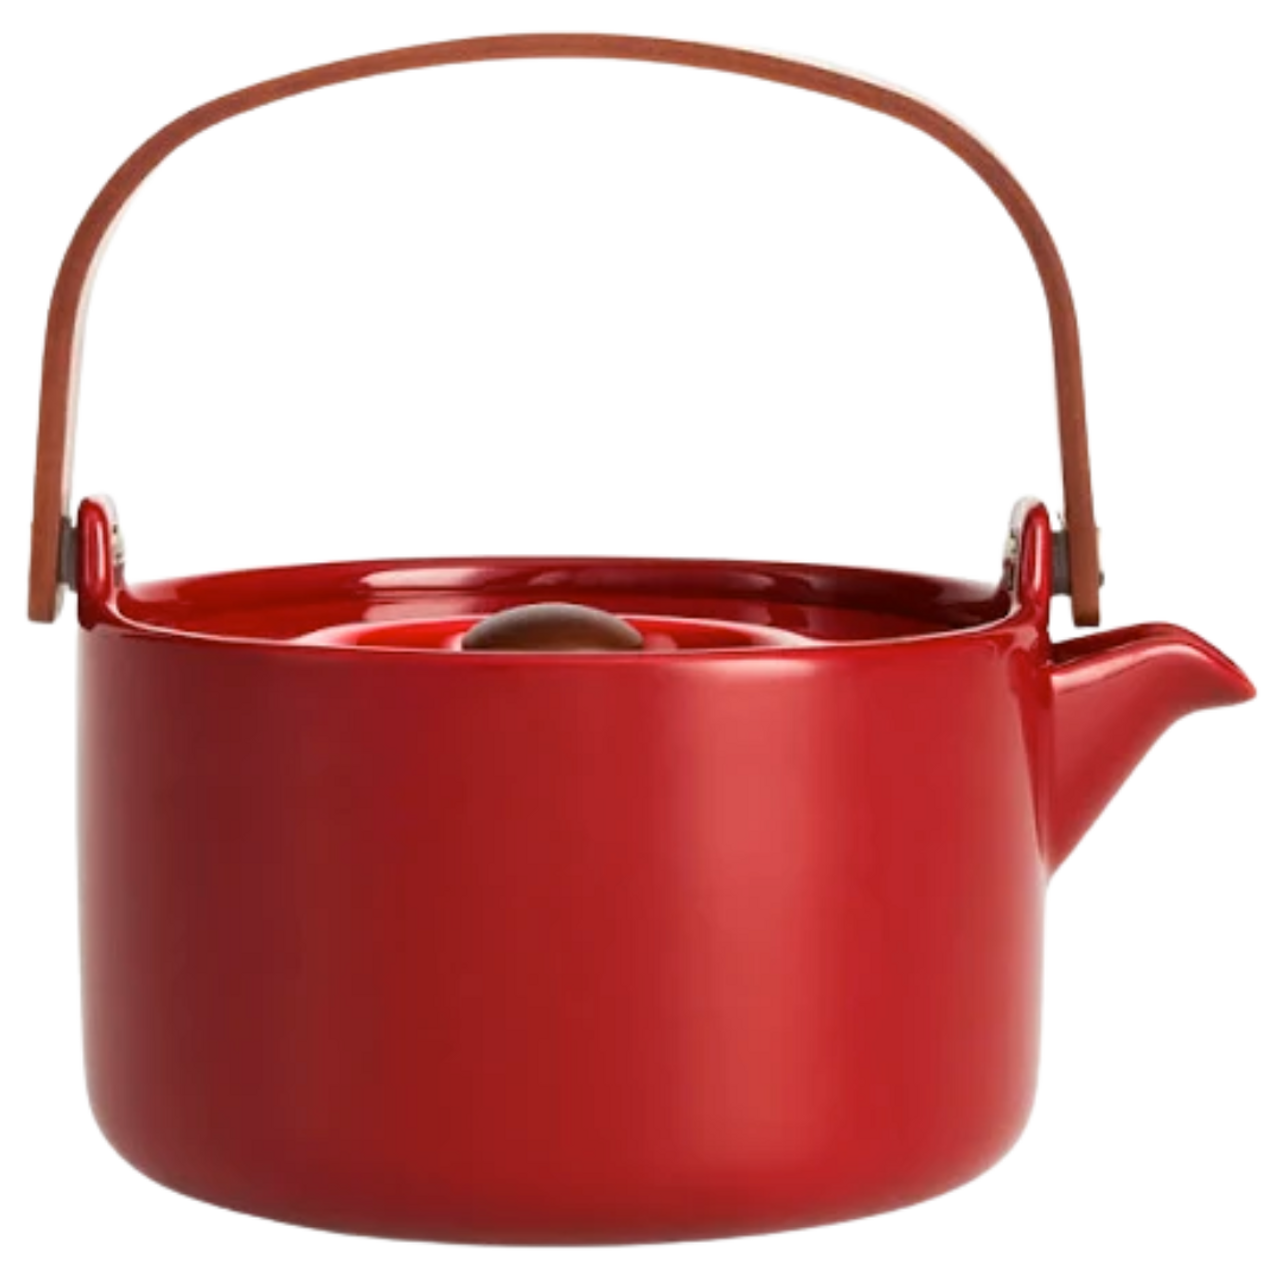 Marimekko Red Ceramic Teapot